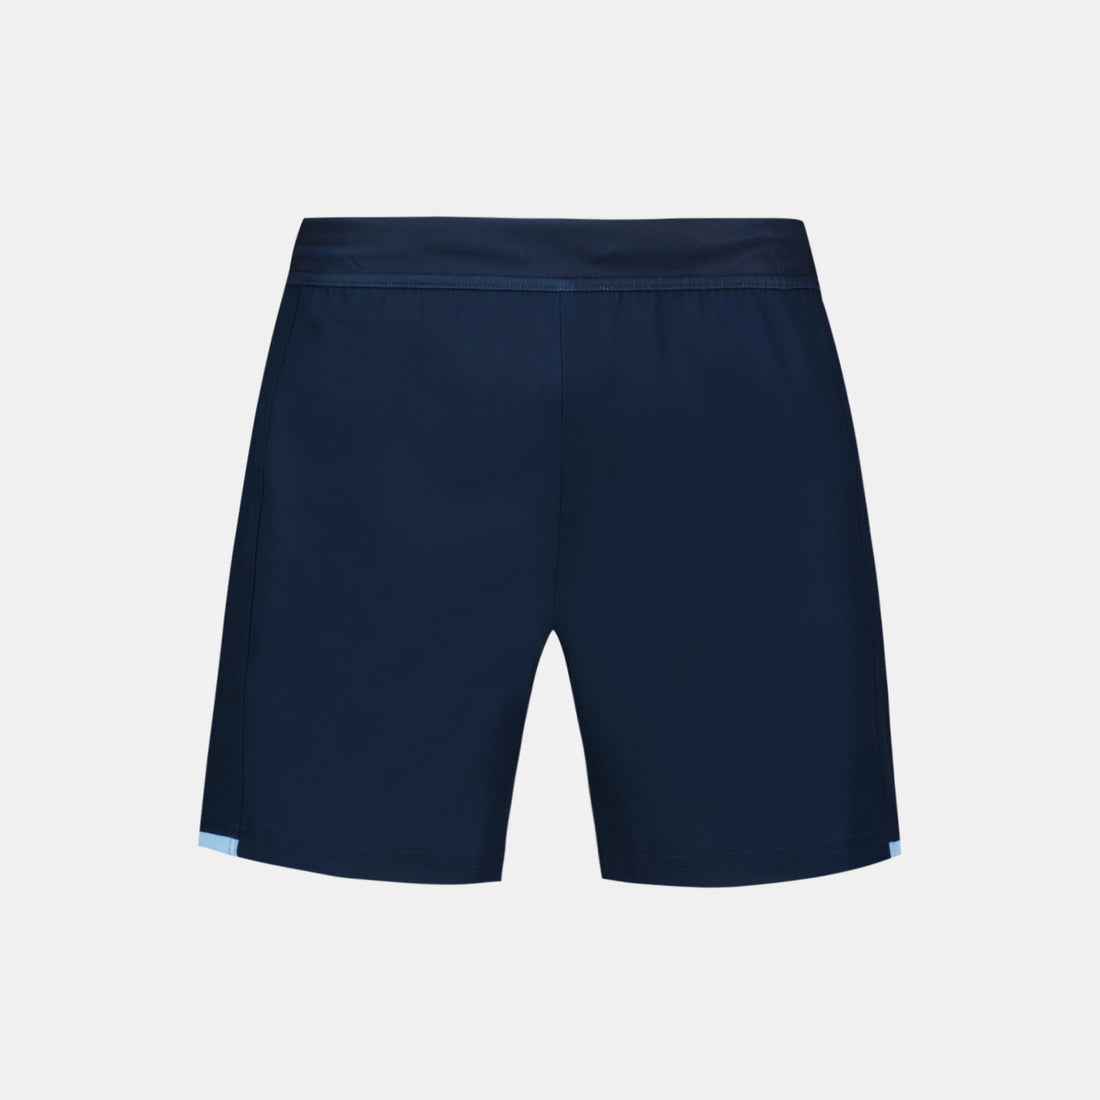 2320302-AB PRO Short M blue navy  | Shorts for men